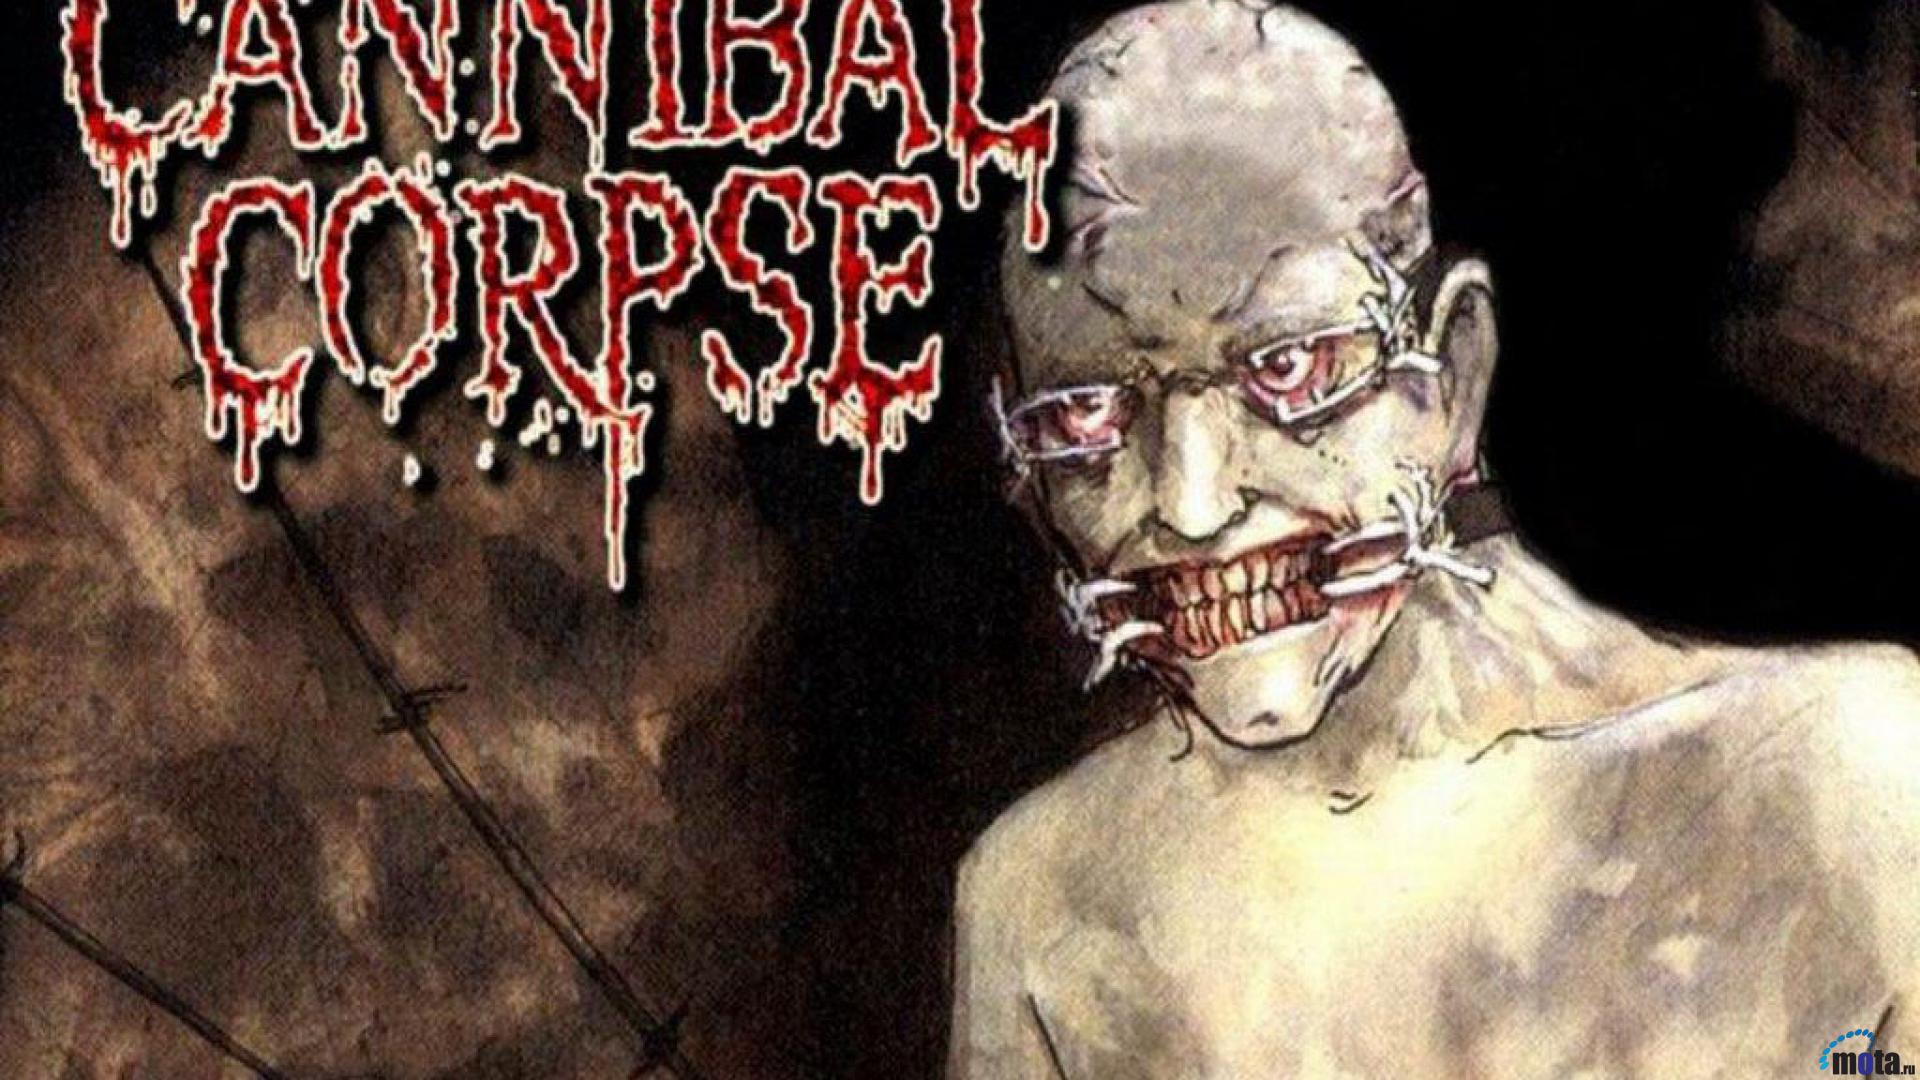 Cannibal Corpse Wallpaper HD